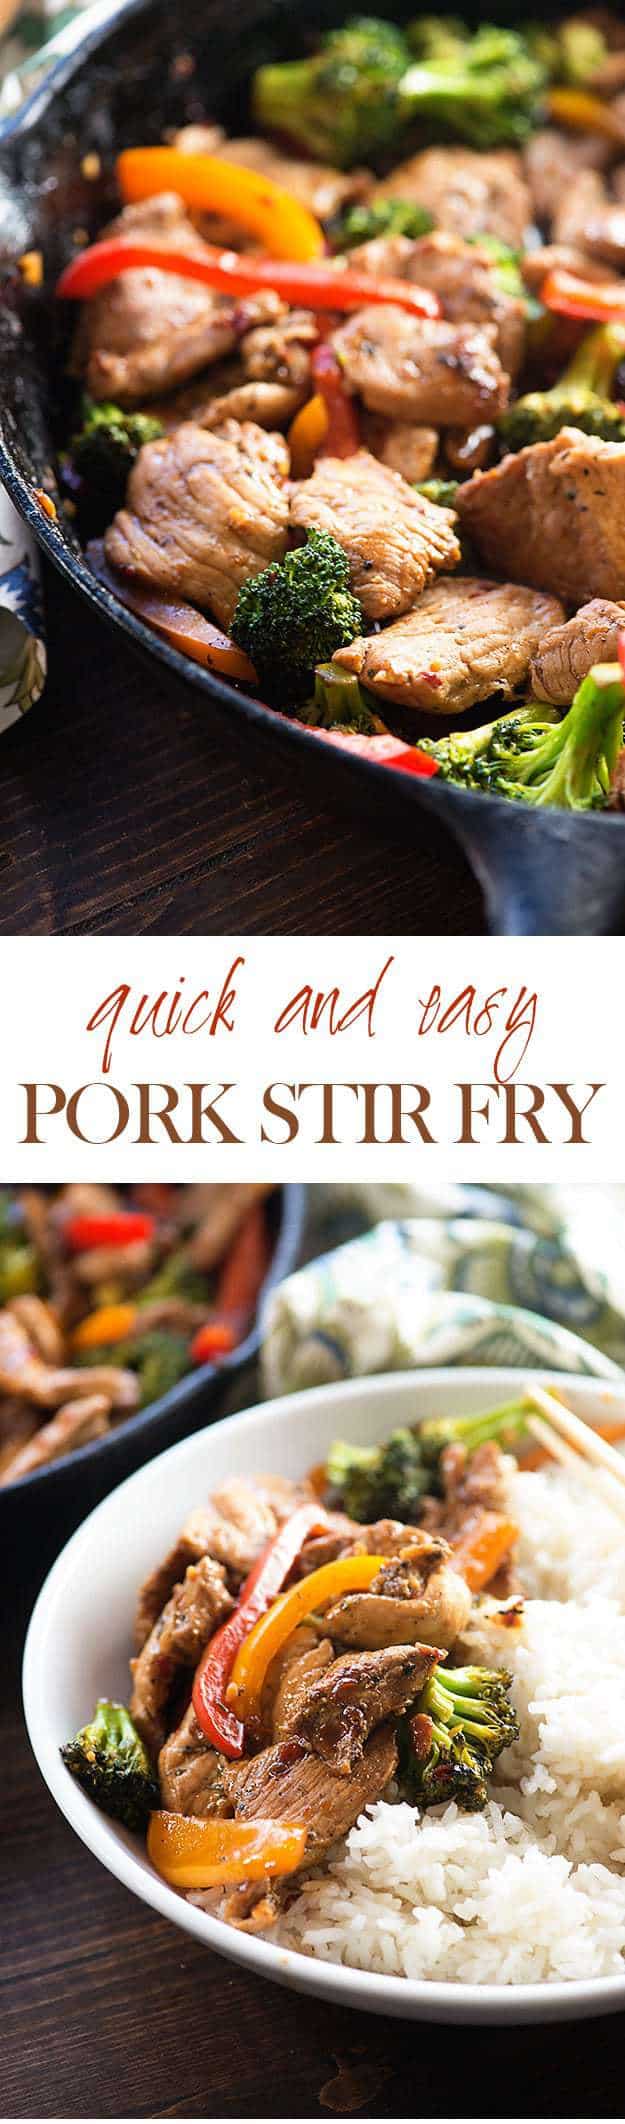 Pork stir fry in a cast iron skillet